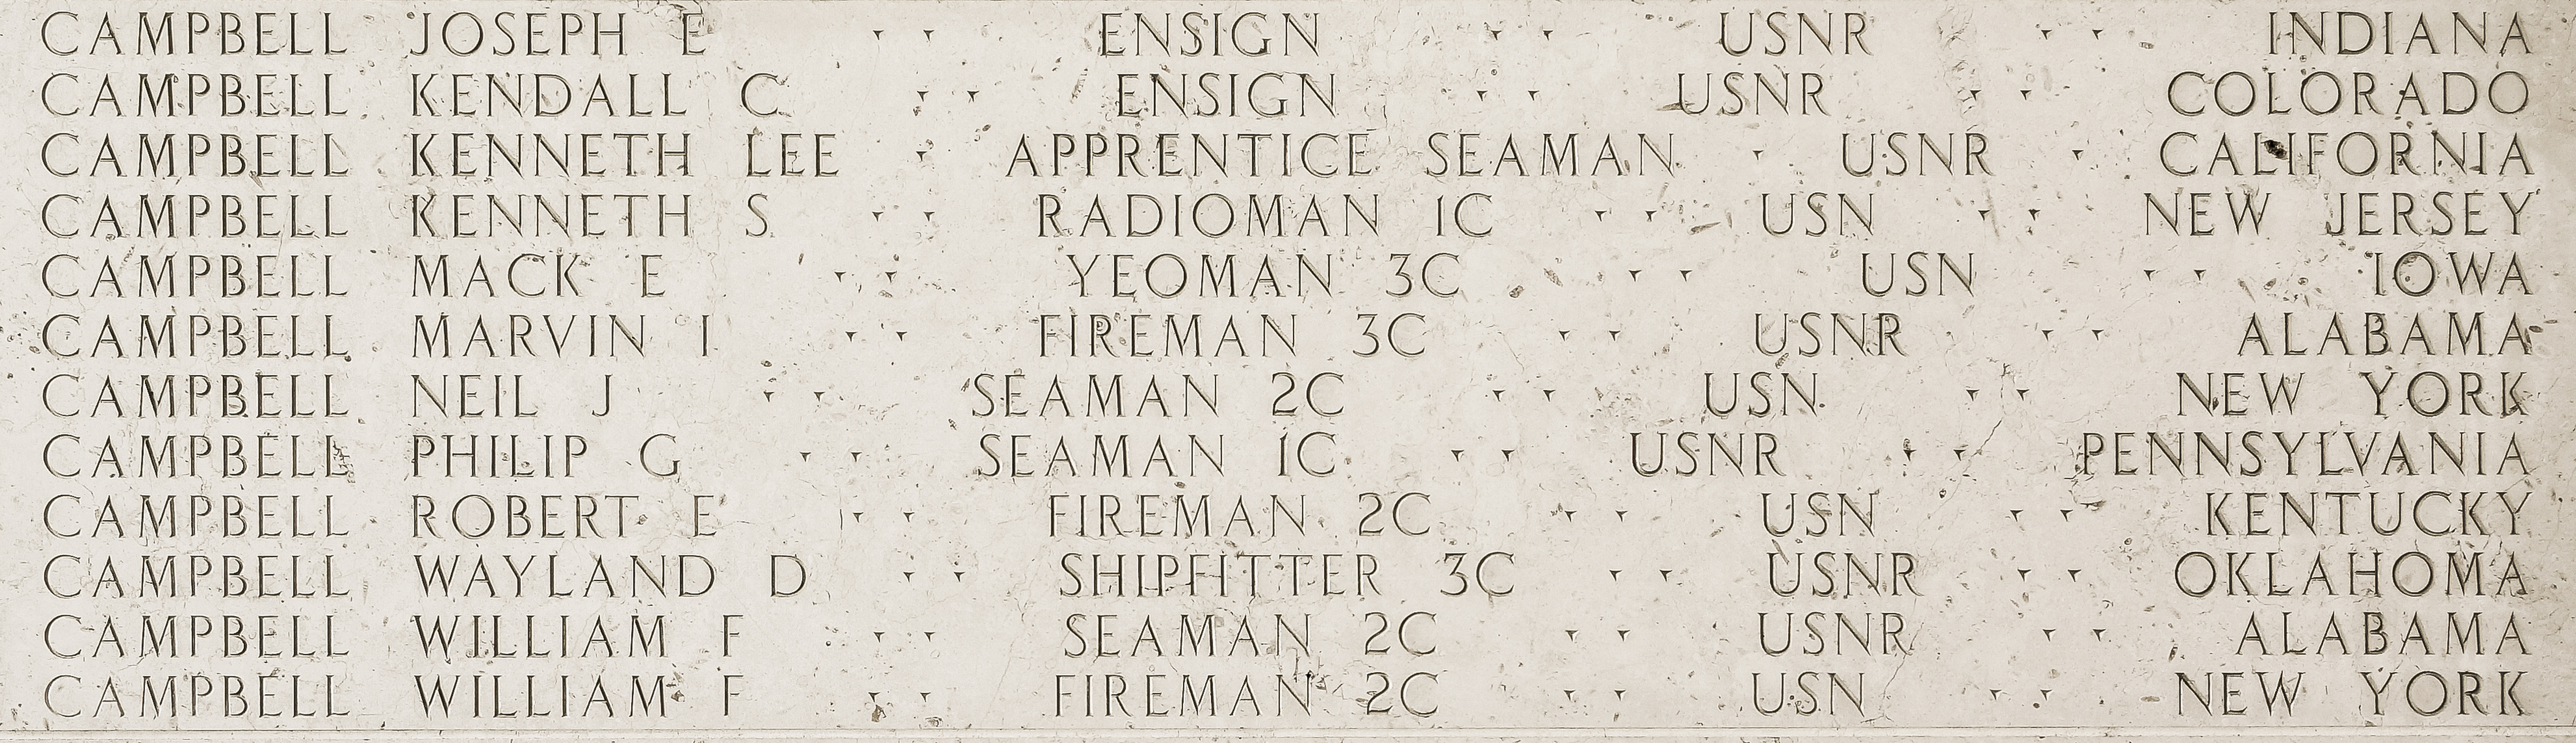 William F. Campbell, Fireman Second Class